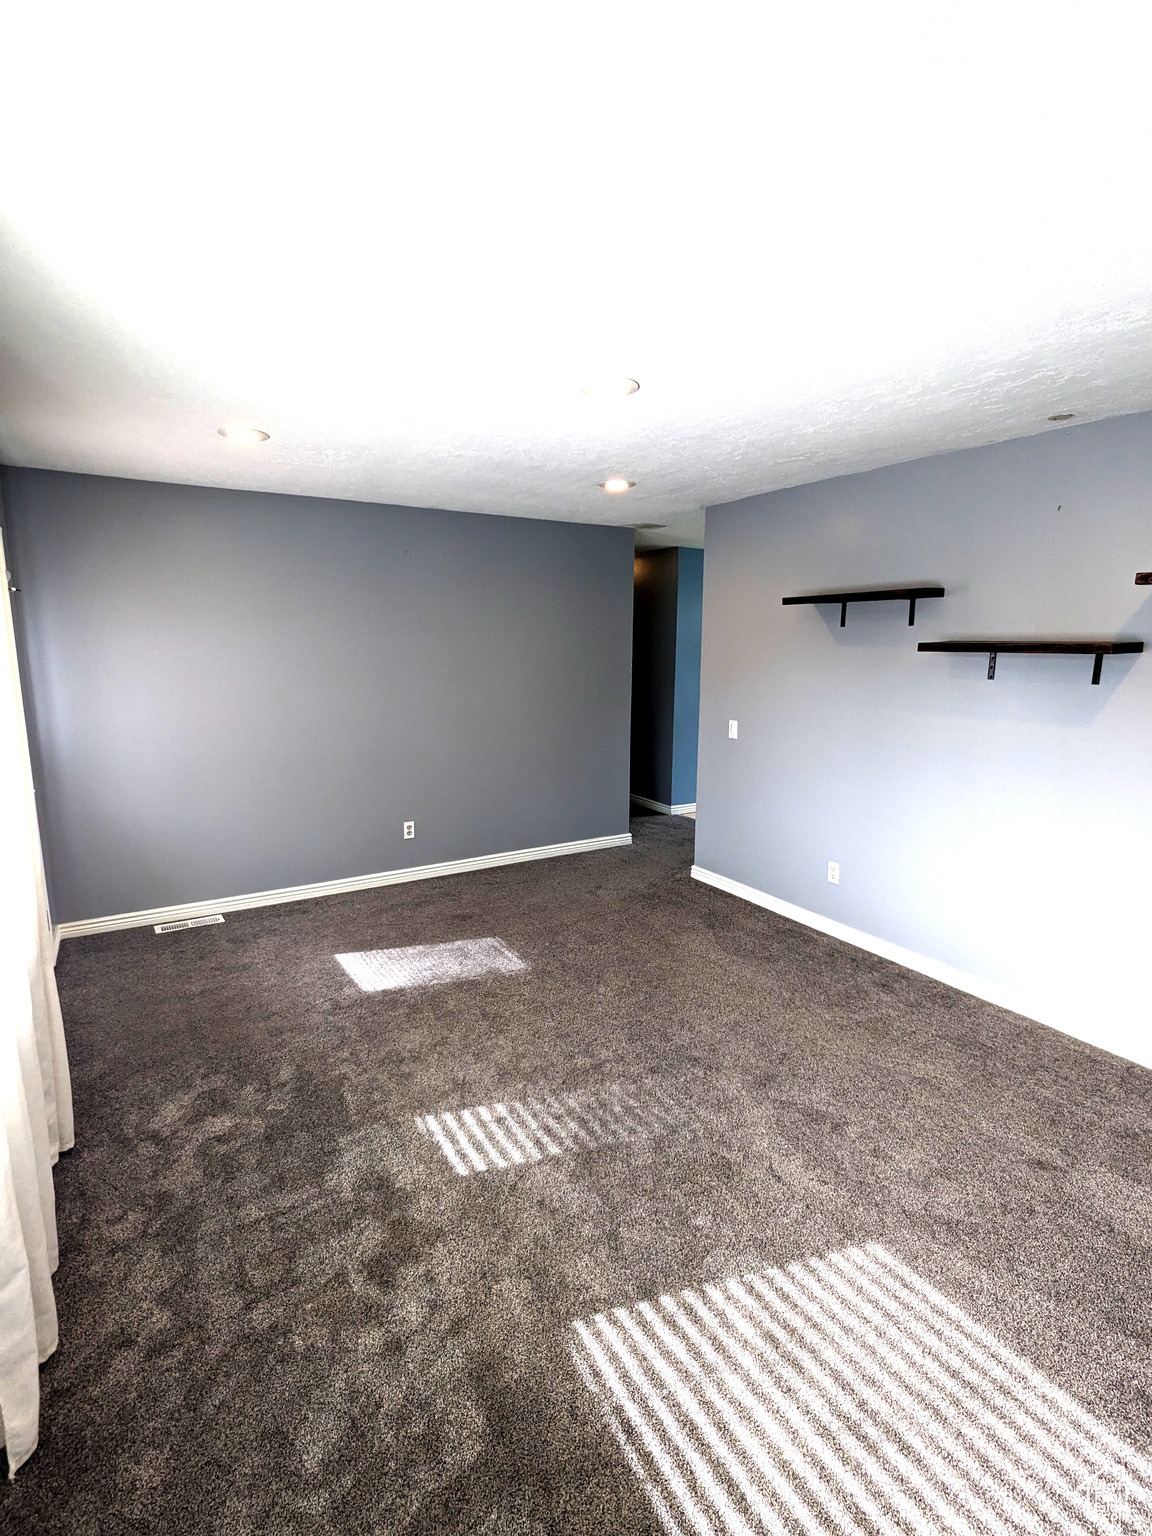 Empty room featuring dark colored carpet